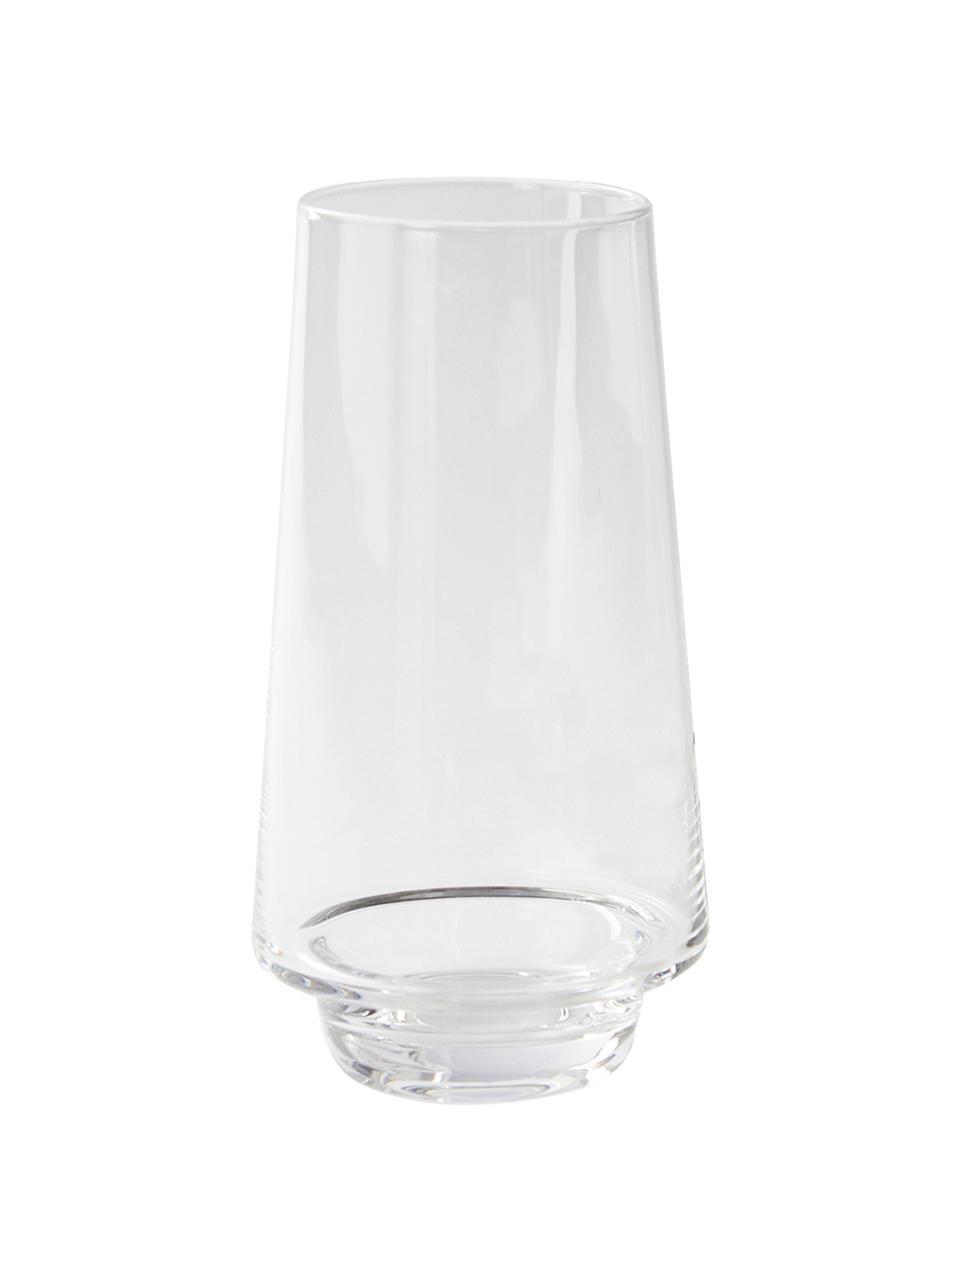 Waterglazen Kai in transparant, 4 stuks, Glas, Transparant, Ø 6 x H 15 cm, 450 ml